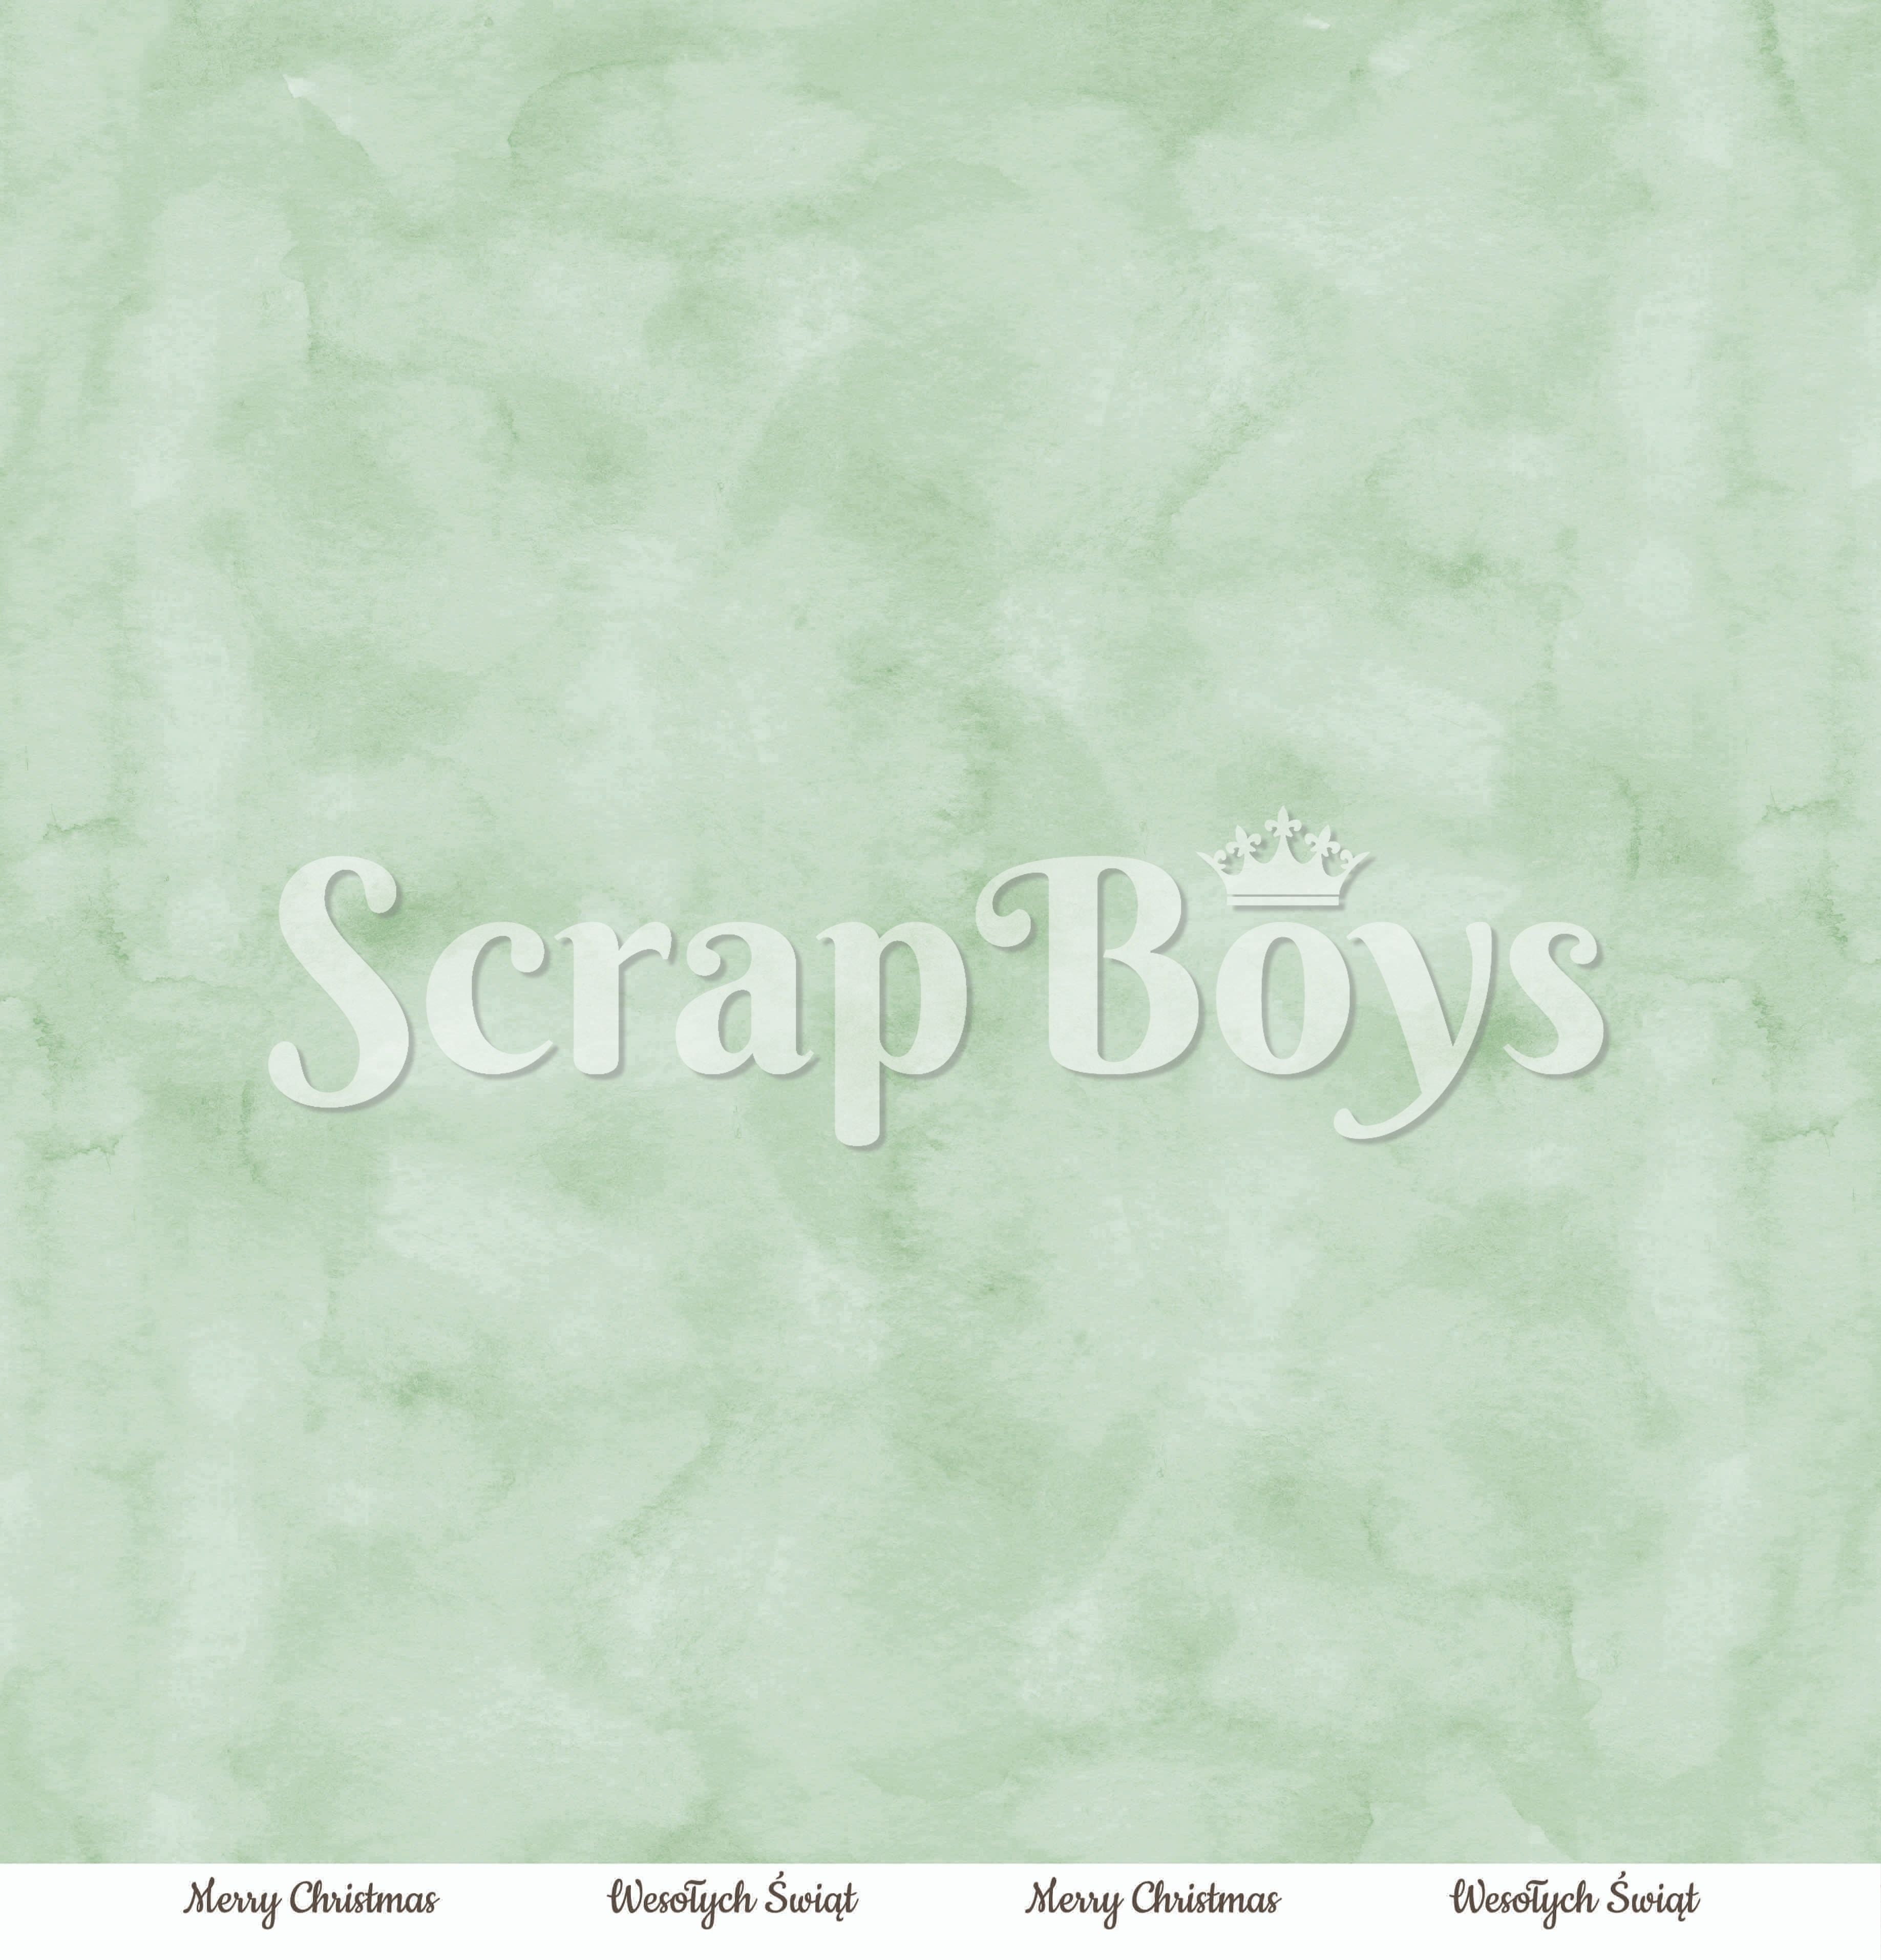 Scrapboys - Winter Time - 02 - 12x12"